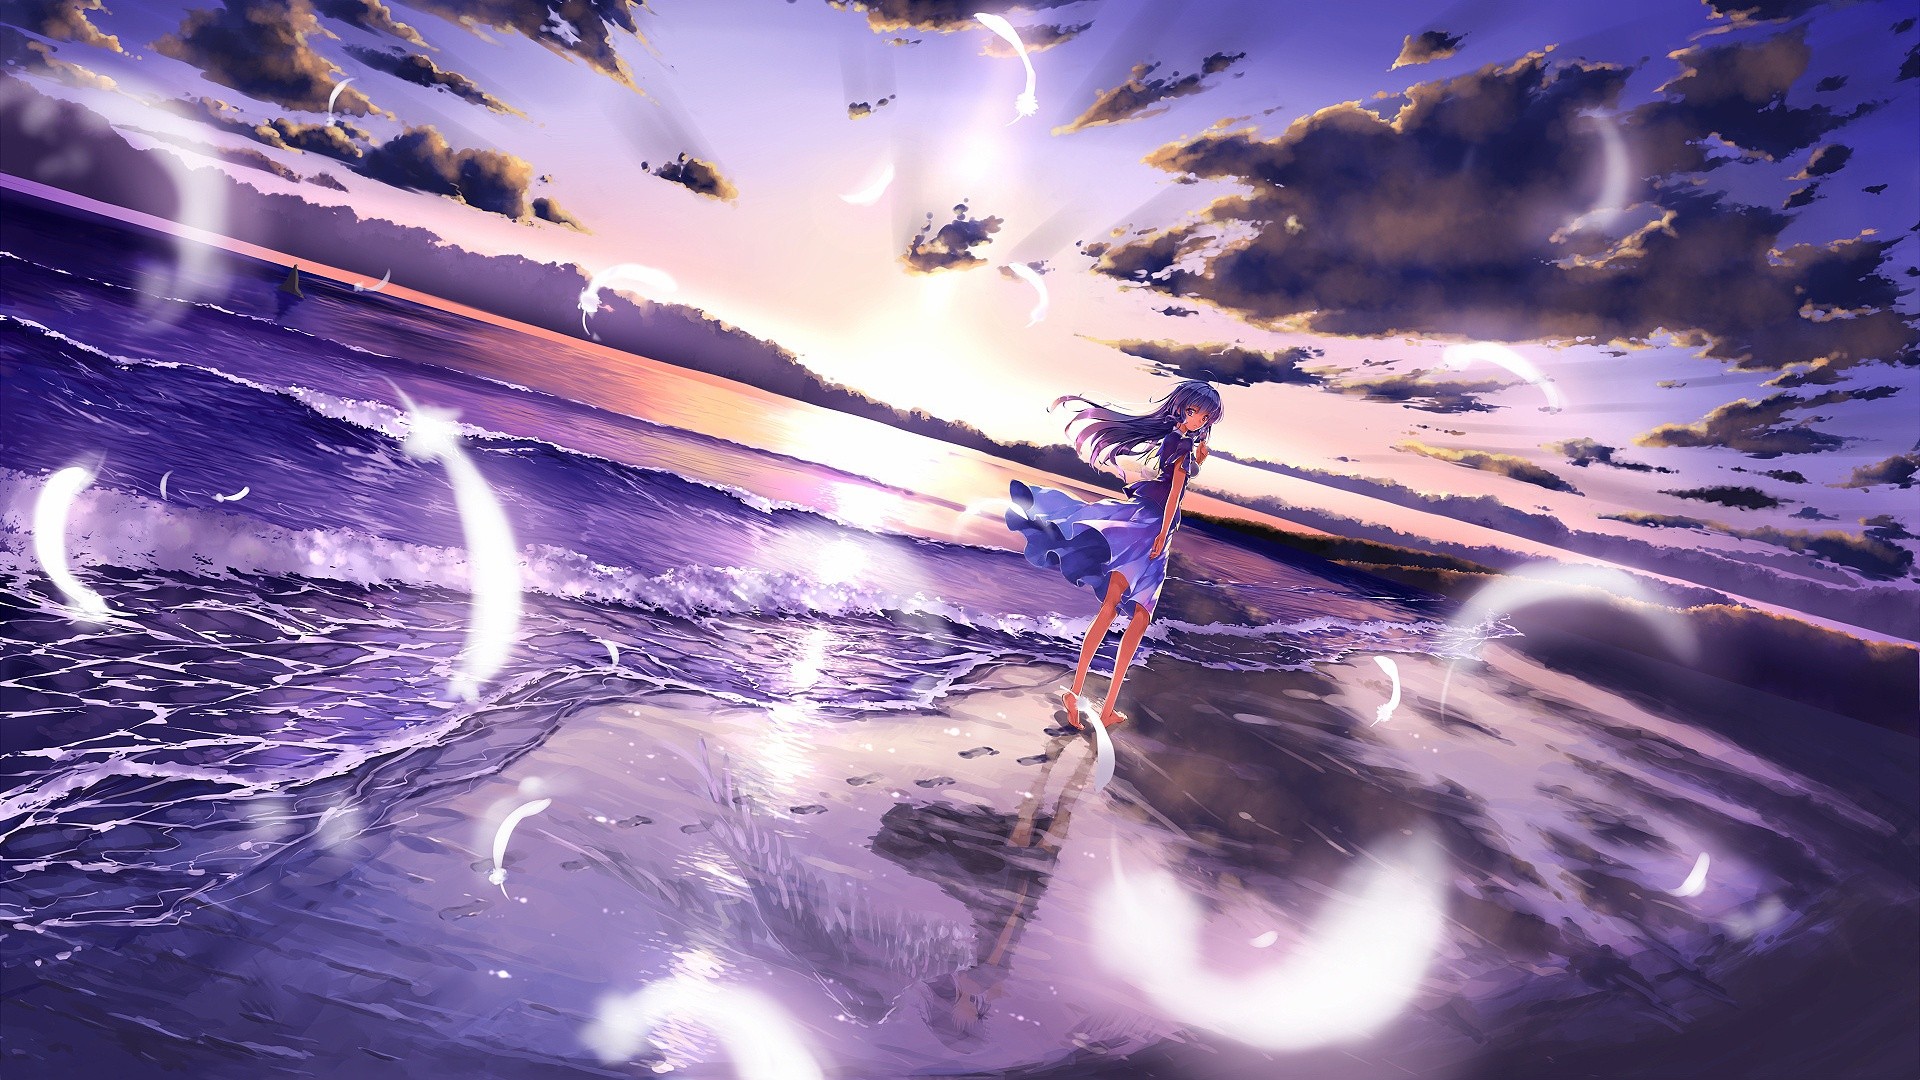 anime wallpaper 1920x1080,sky,purple,light,water,cg artwork